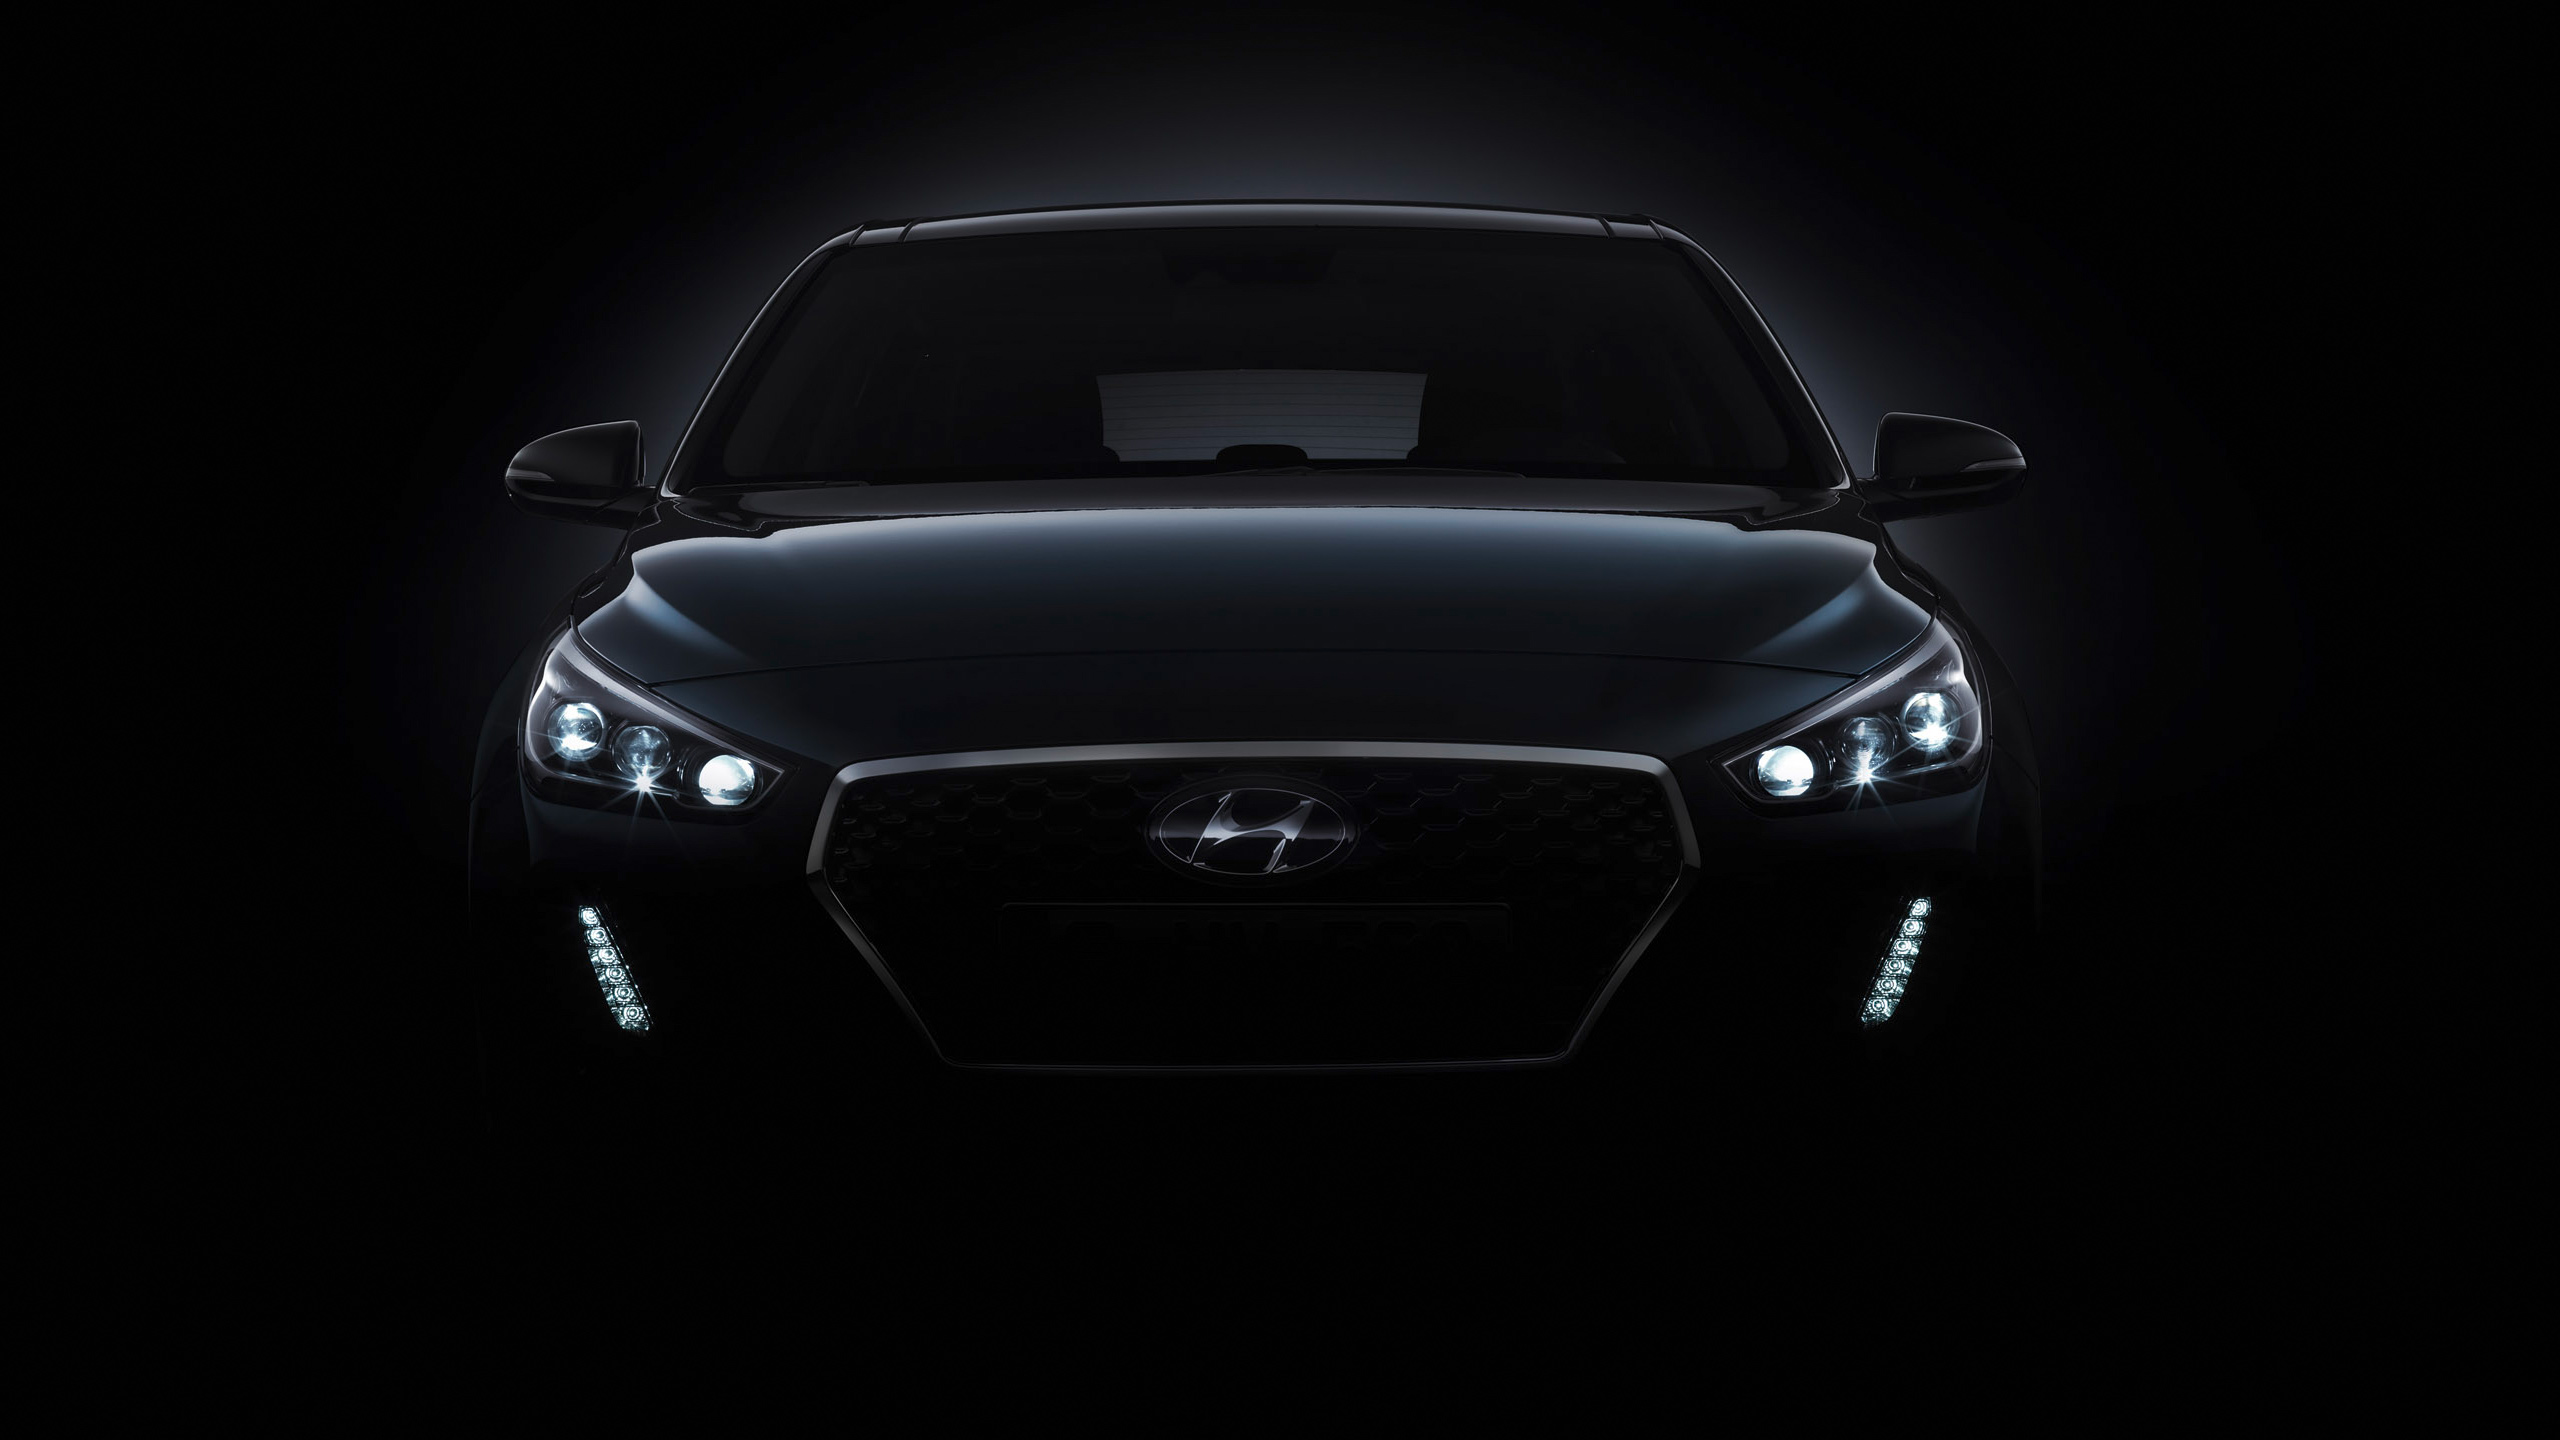 2017 Hyundai i30 Teaser Wallpaper | HD Car Wallpapers | ID ...